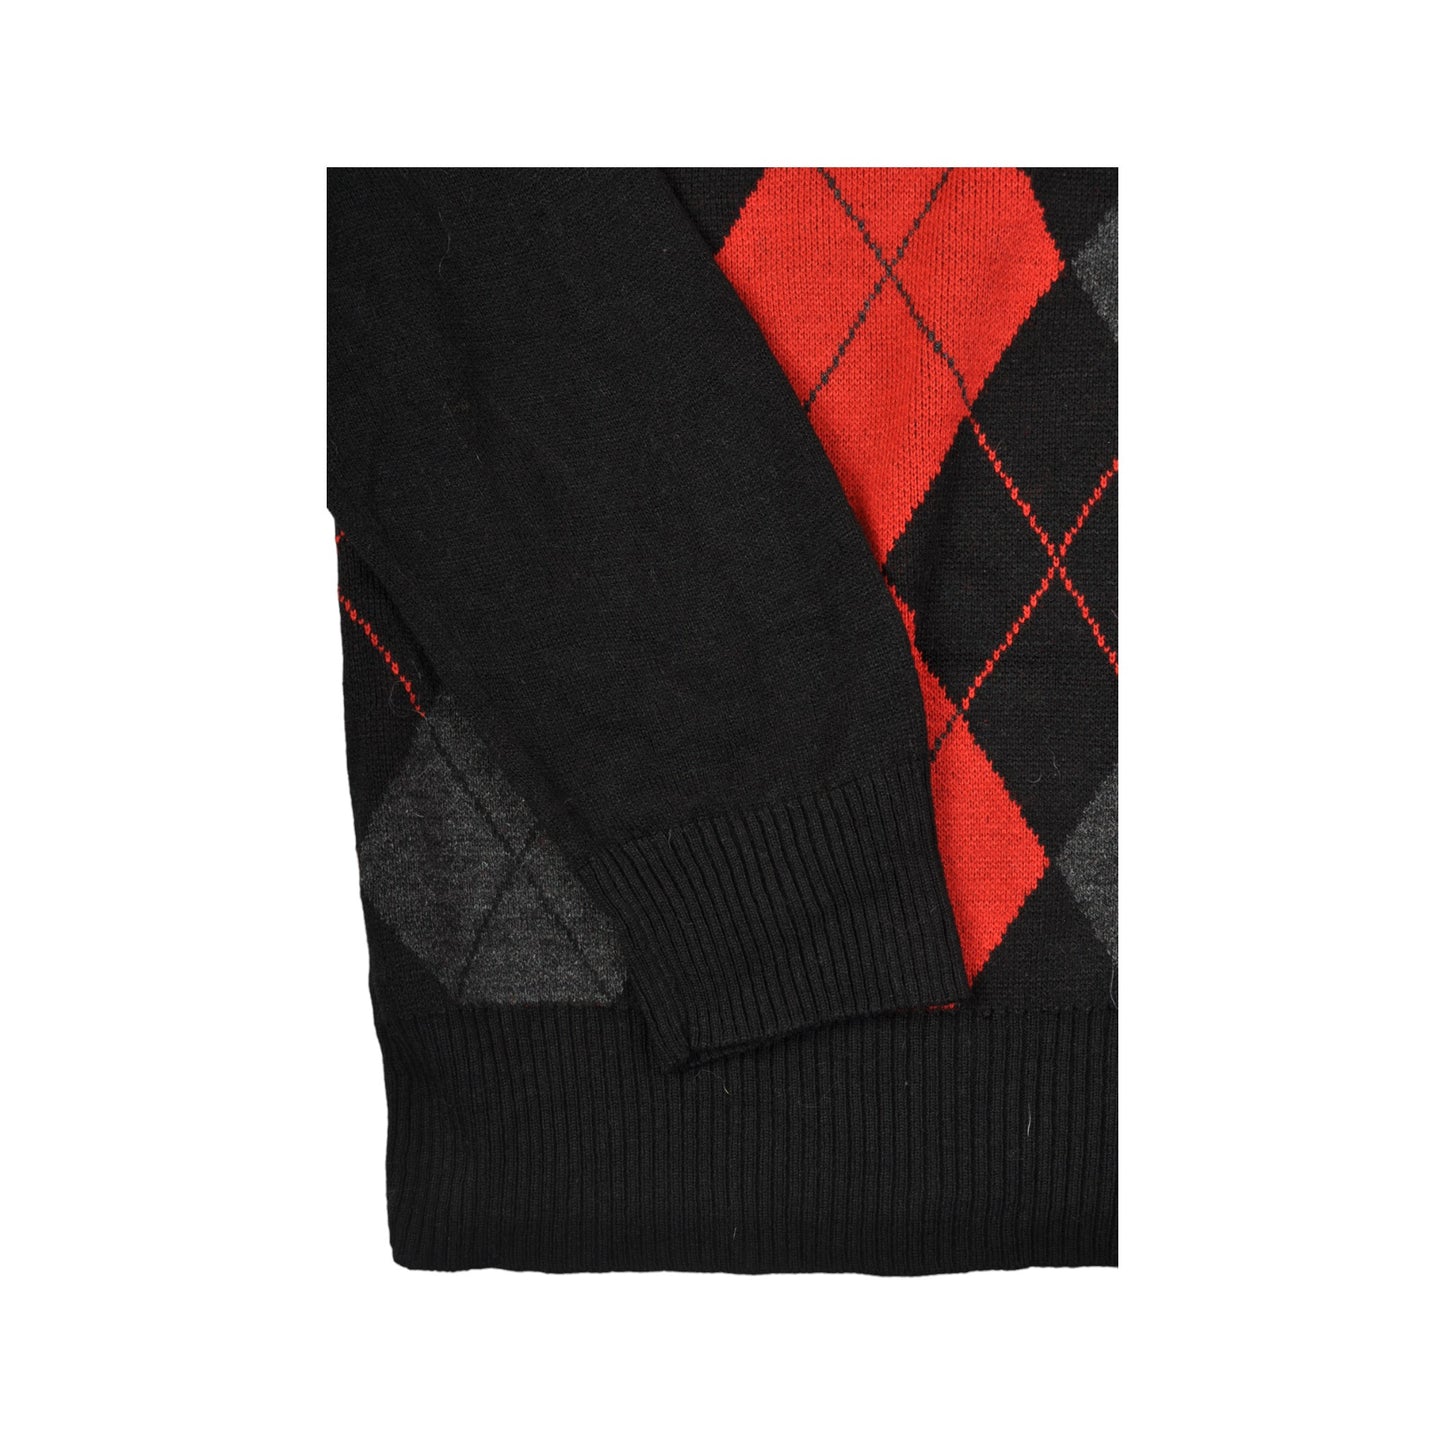 Vintage Argyle Pattern Knitwear Sweater Black/Red Large